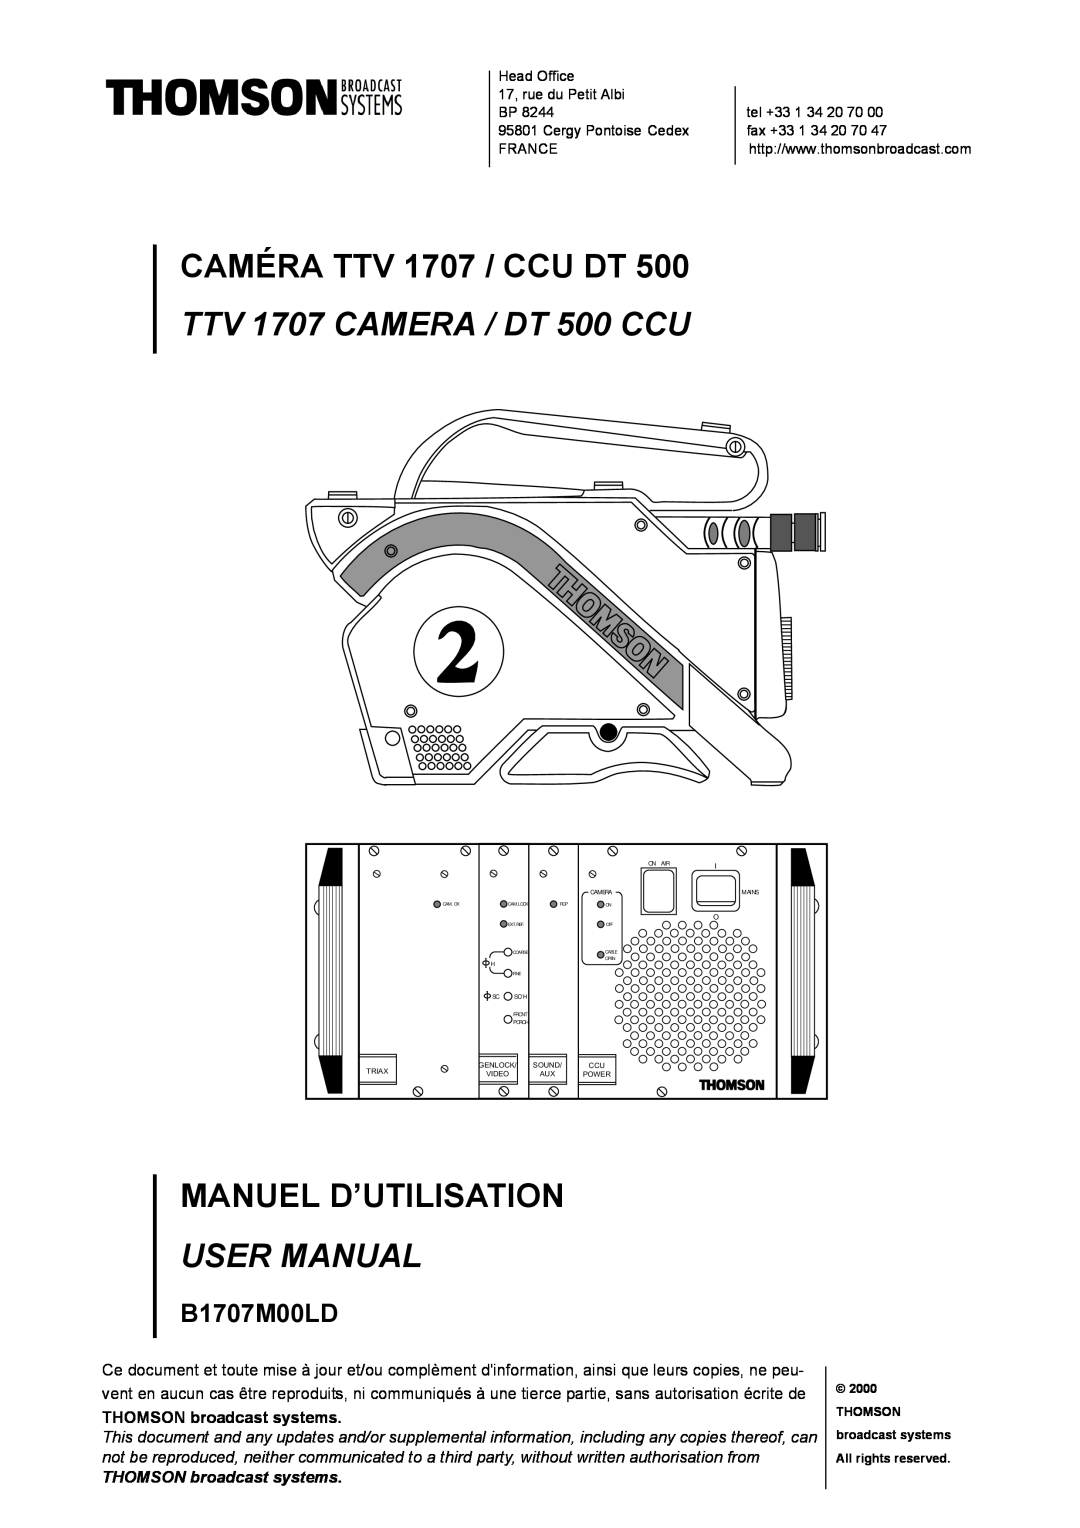 Technicolor - Thomson CAMERA TTV 1707 manuel dutilisation User Manual, Manuel D’Utilisation, THOMSON broadcast systems 